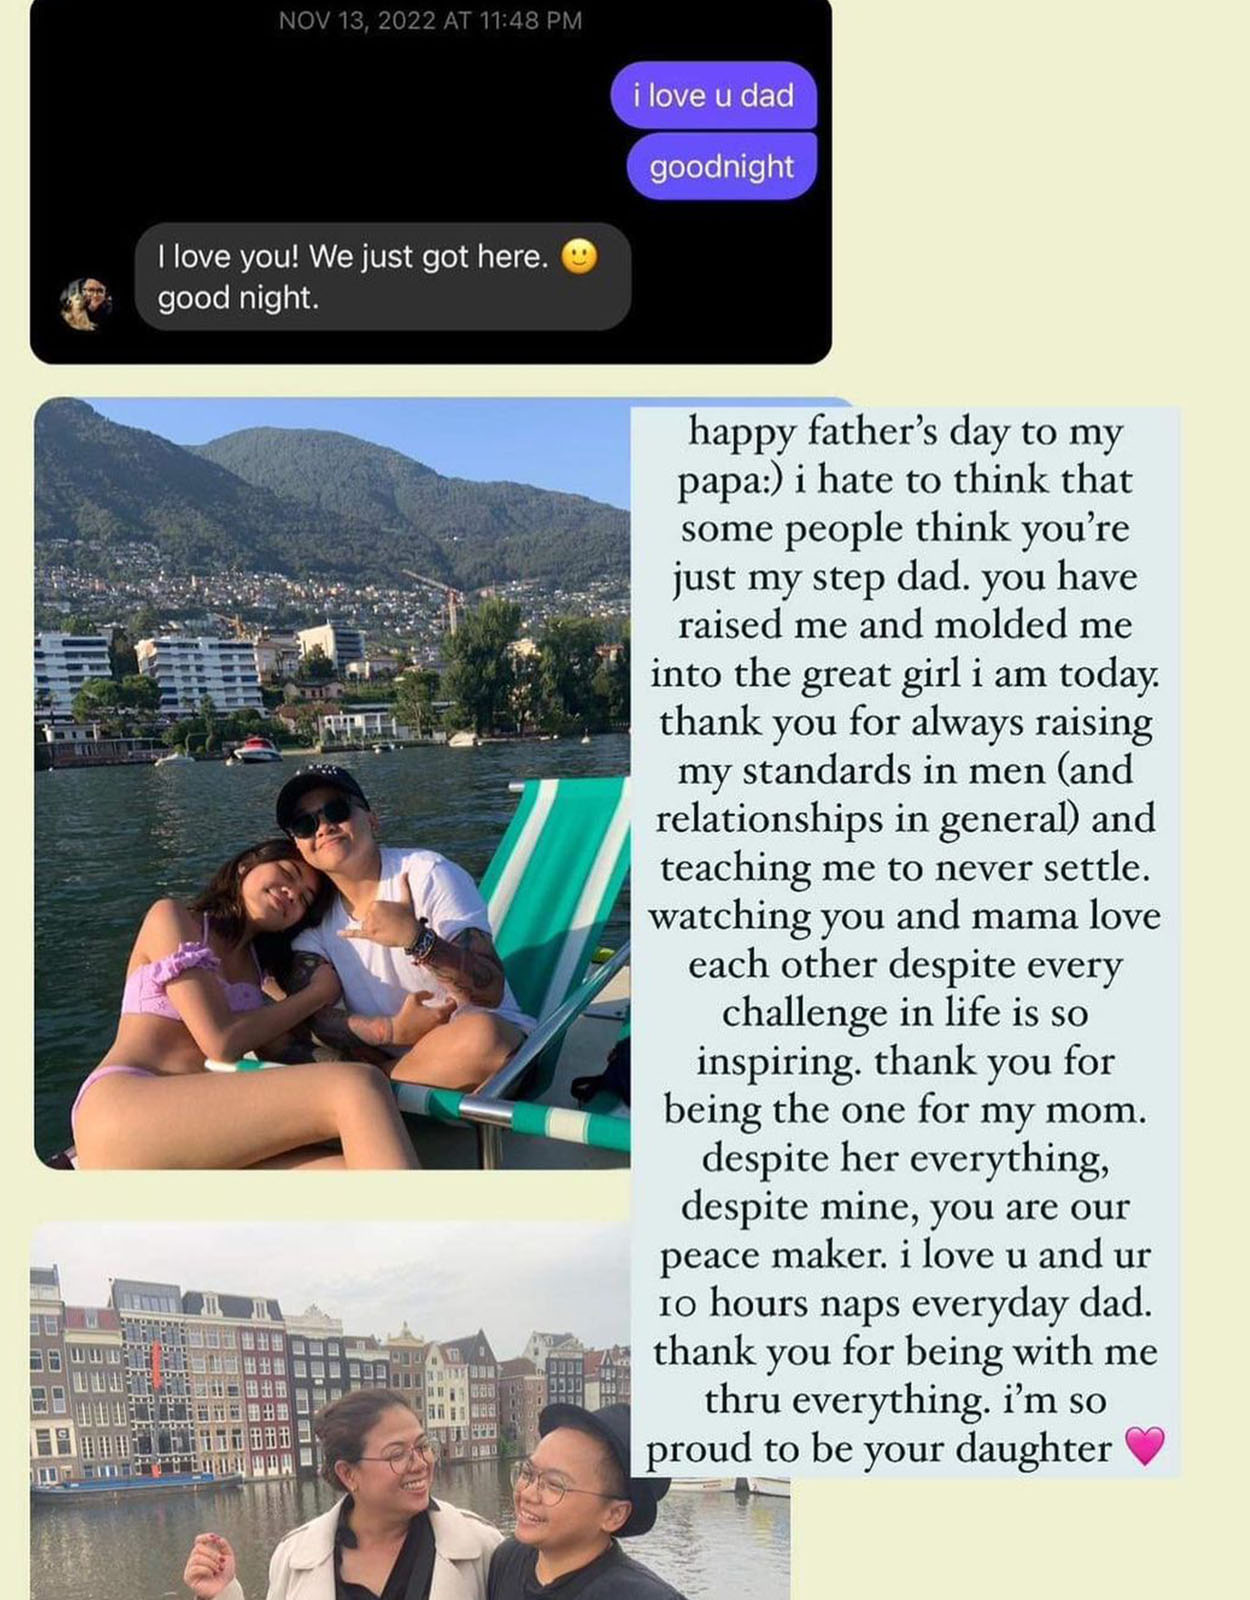 Ice Seguerra Shares Heartwarming Message from Daughter Amara